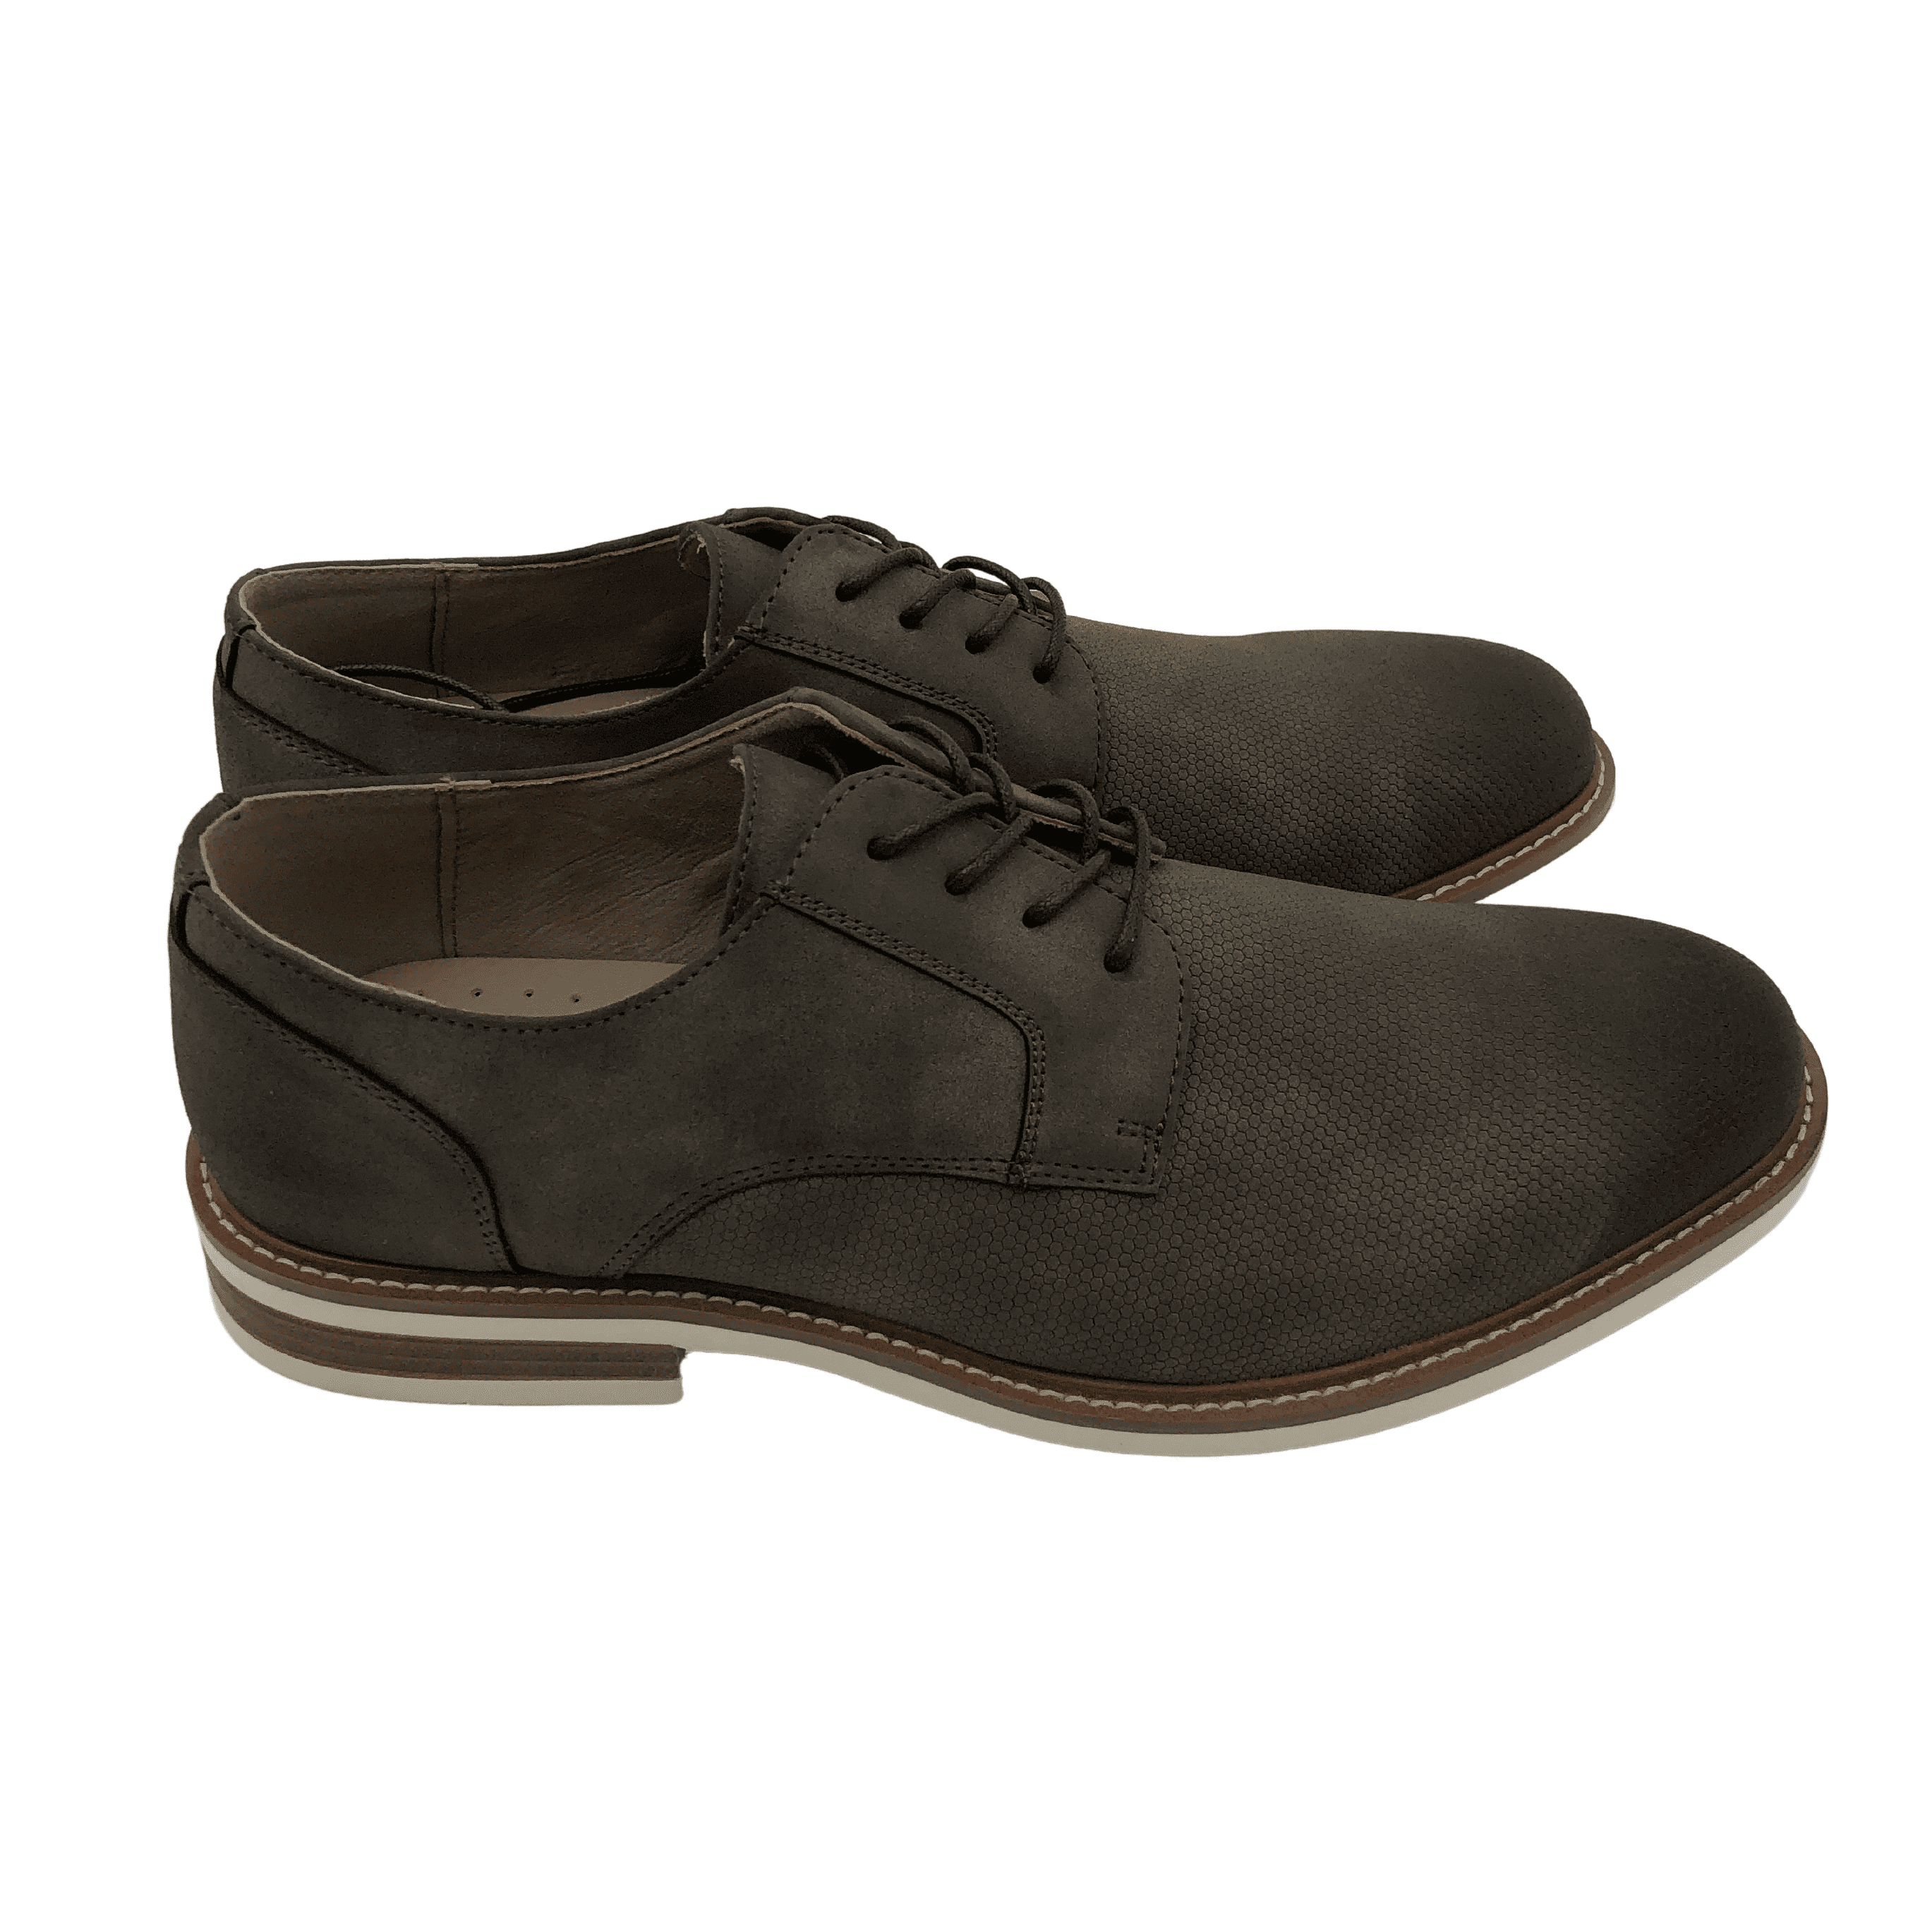 Kenneth Cole Jensen Oxford Shoe / Lace-Up / Grey / Size 10